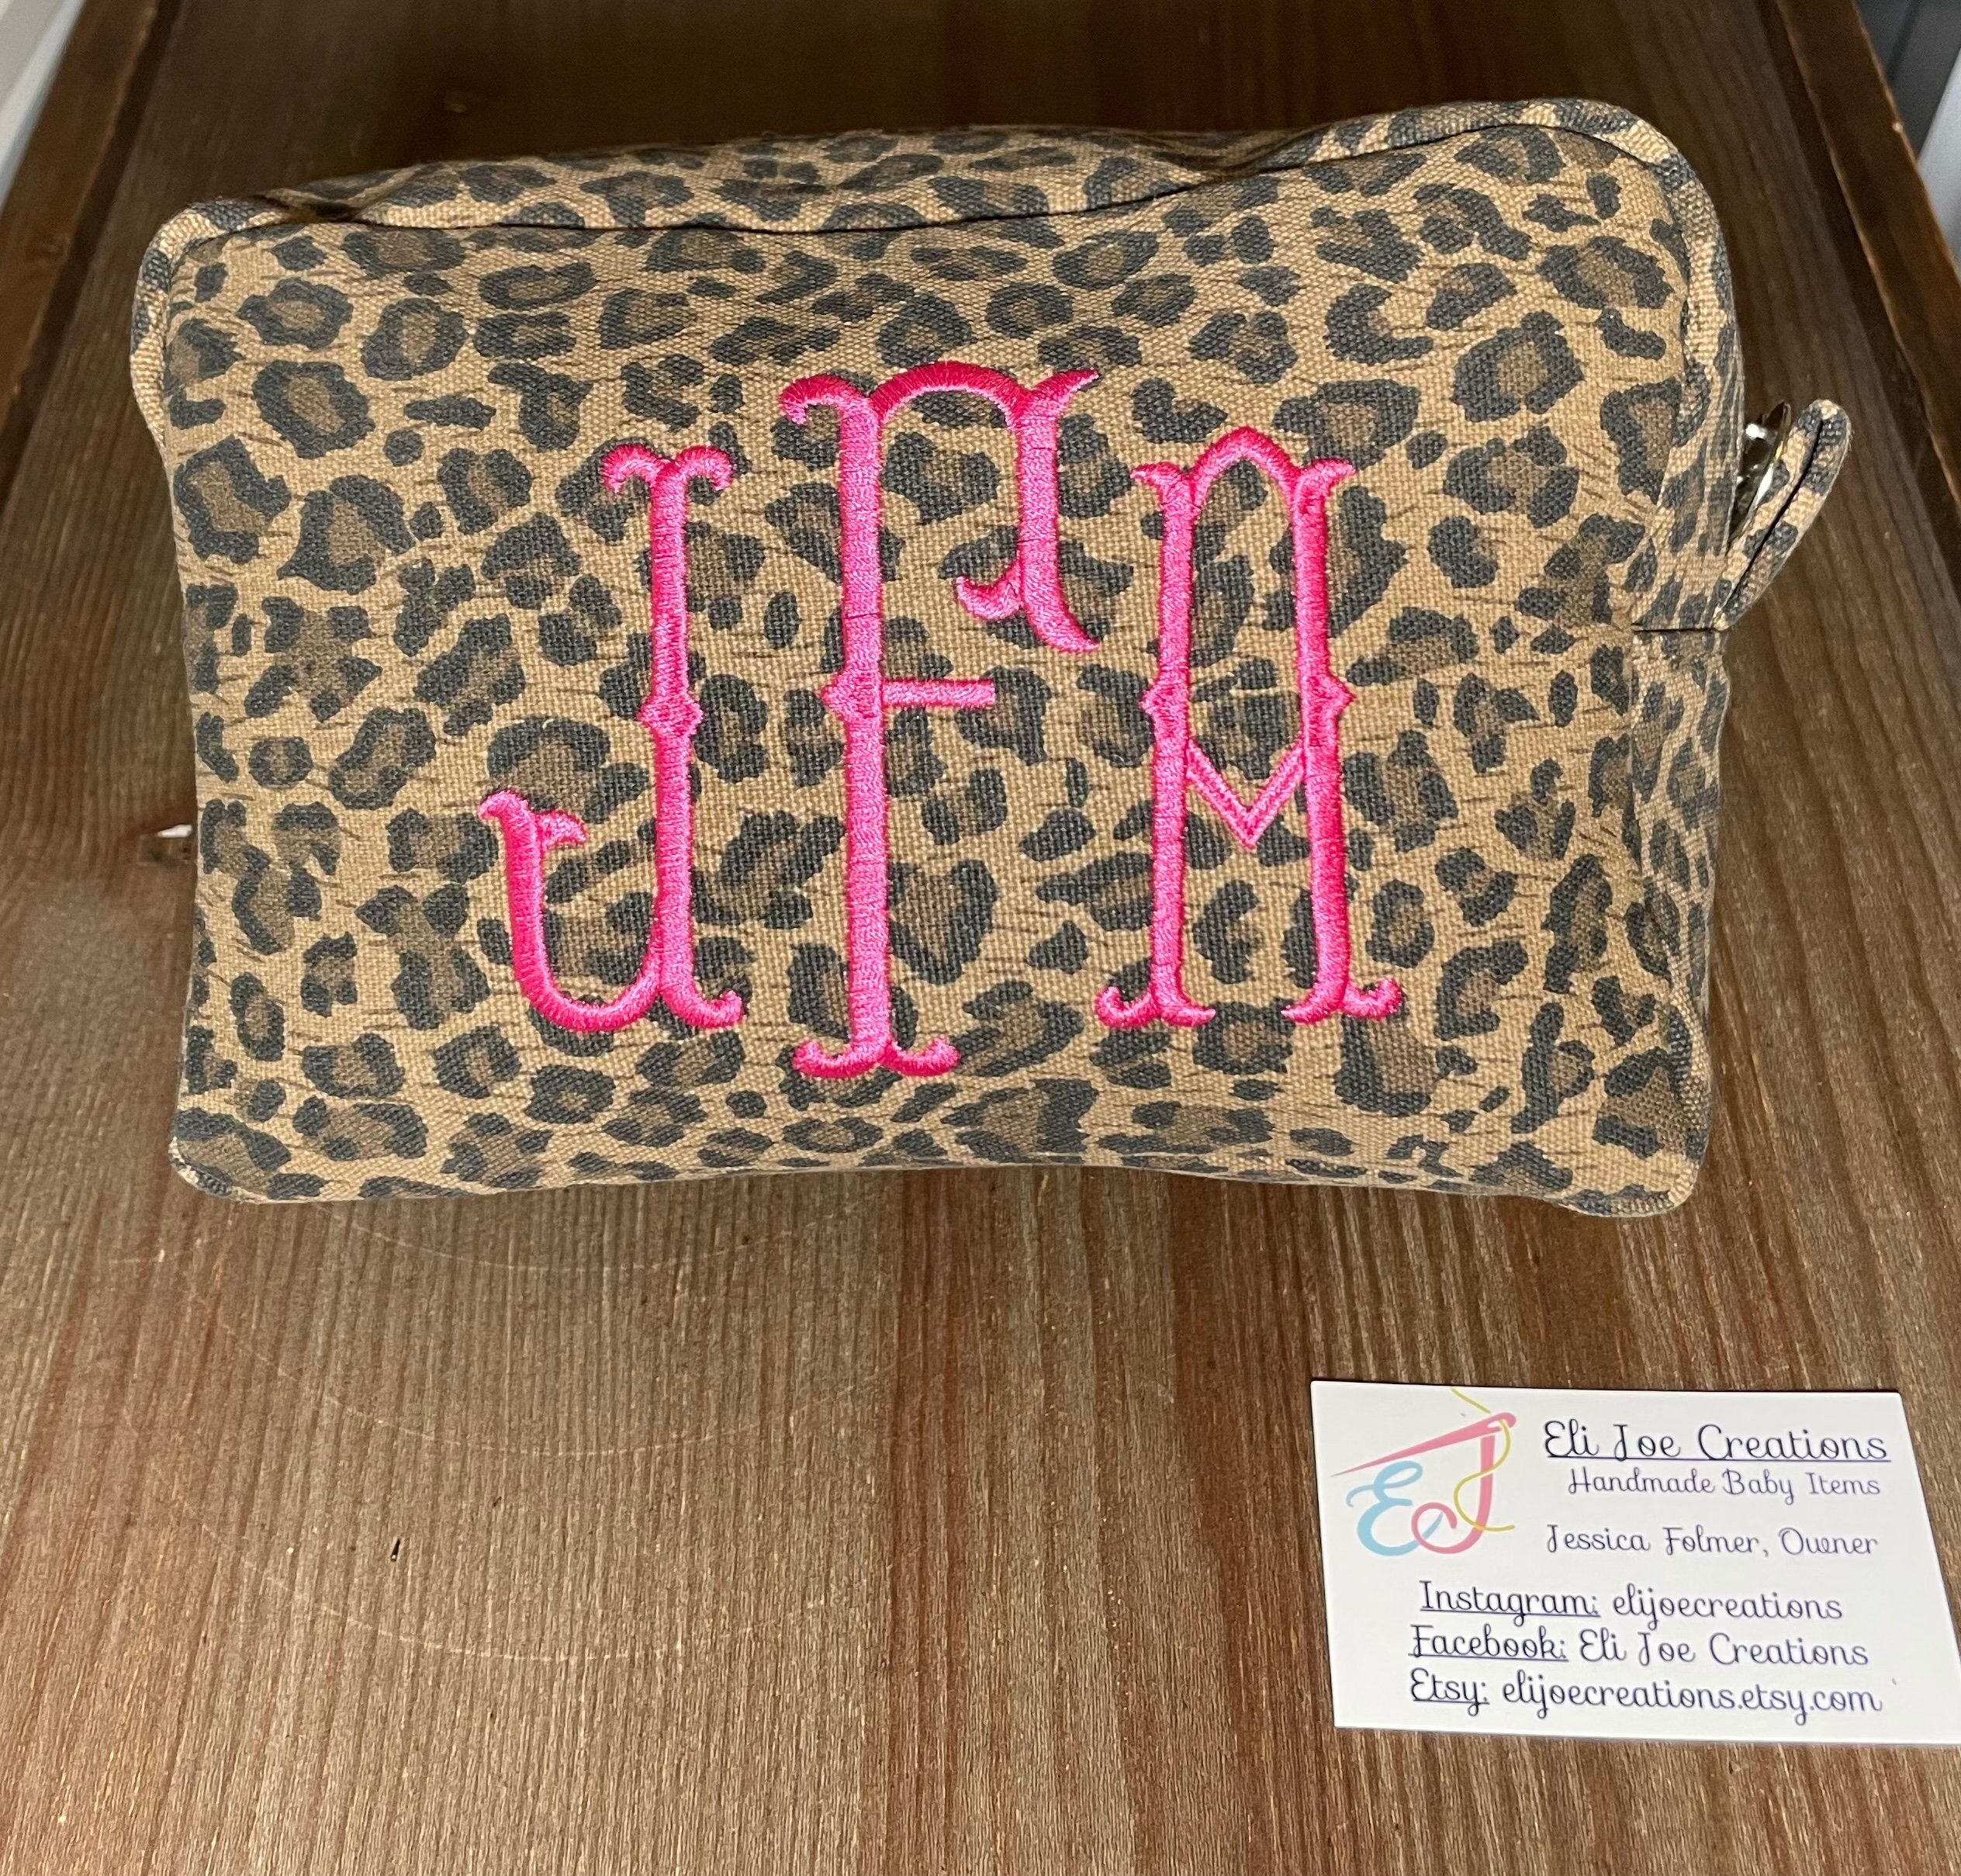 Shoulder Market Bag in Cheetah Print with Monogram